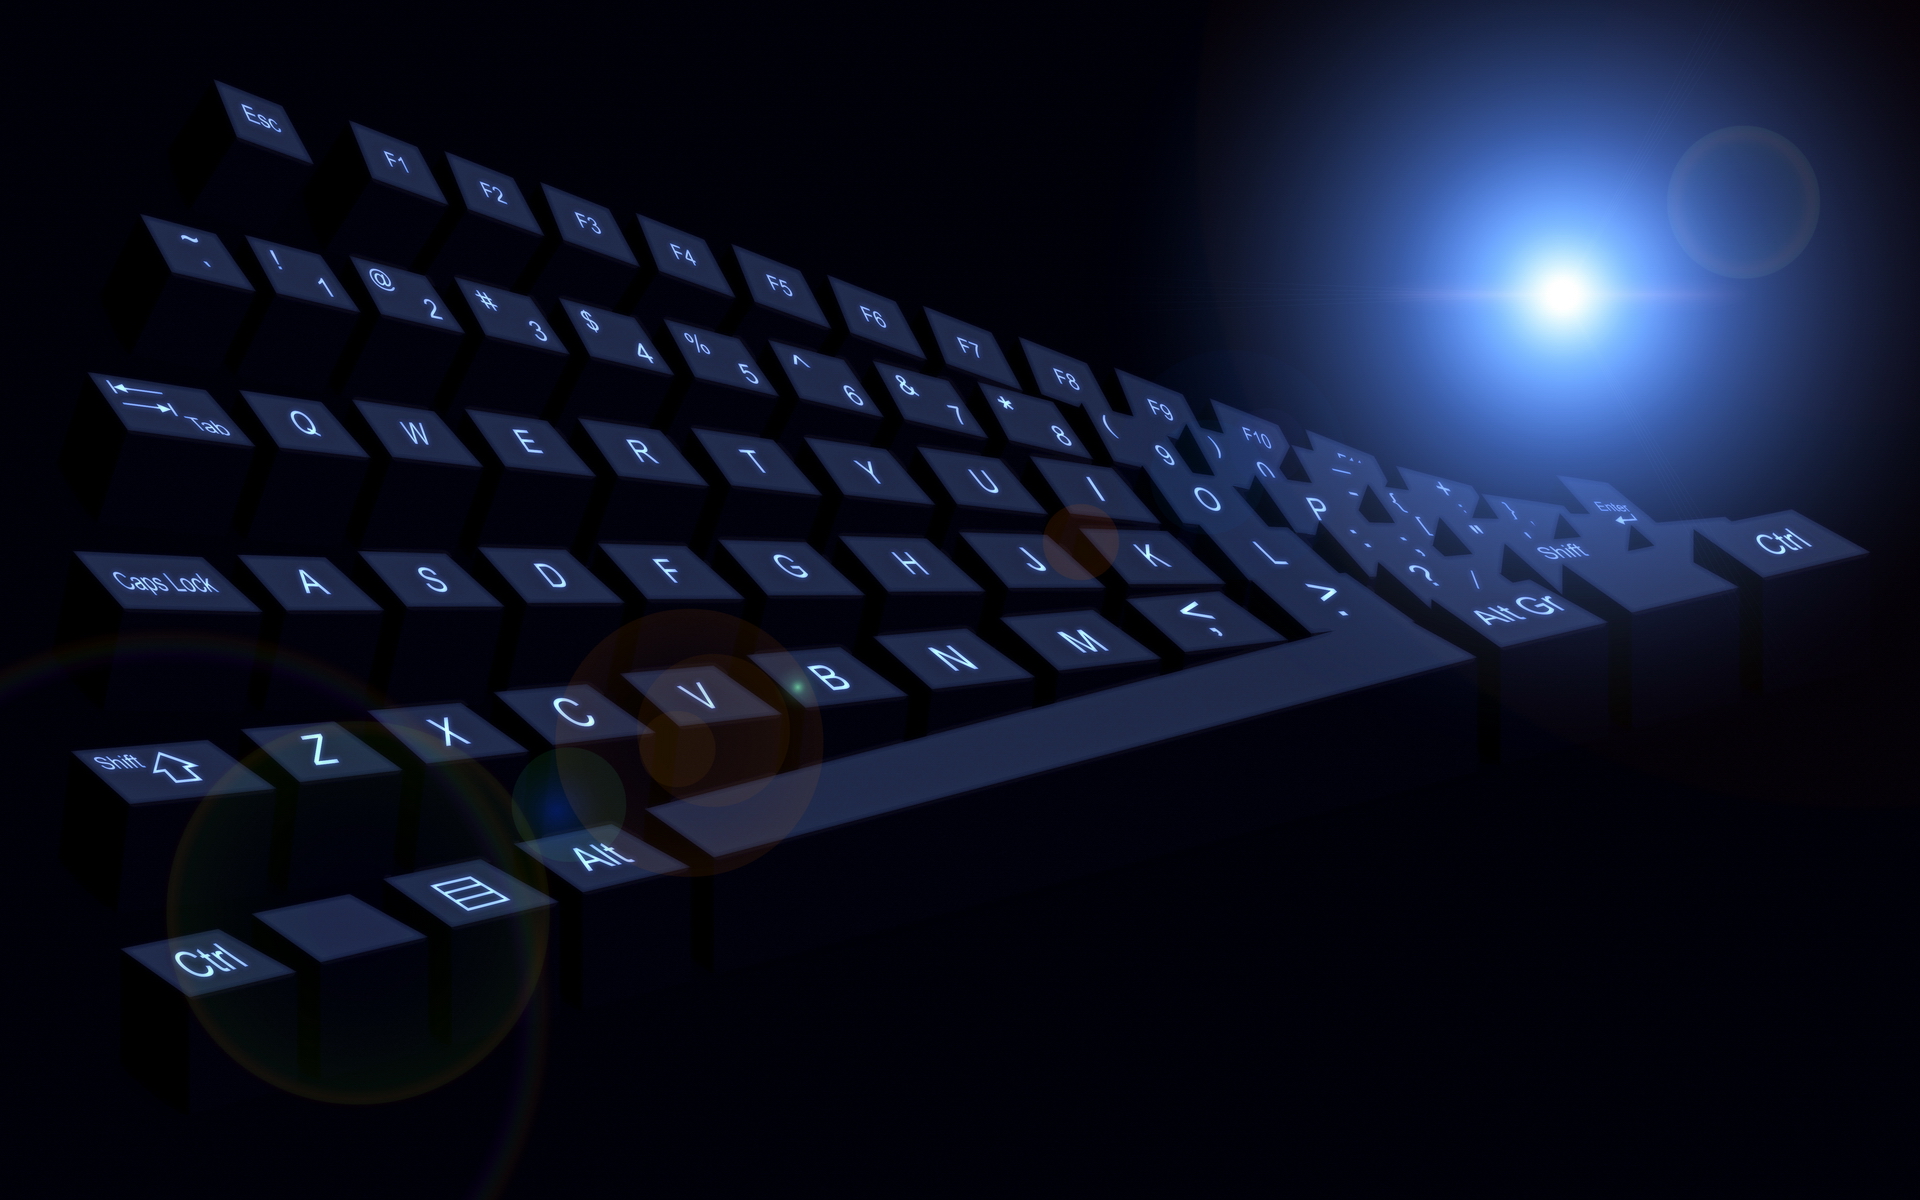 Keyboard HD Wallpaper Background Image